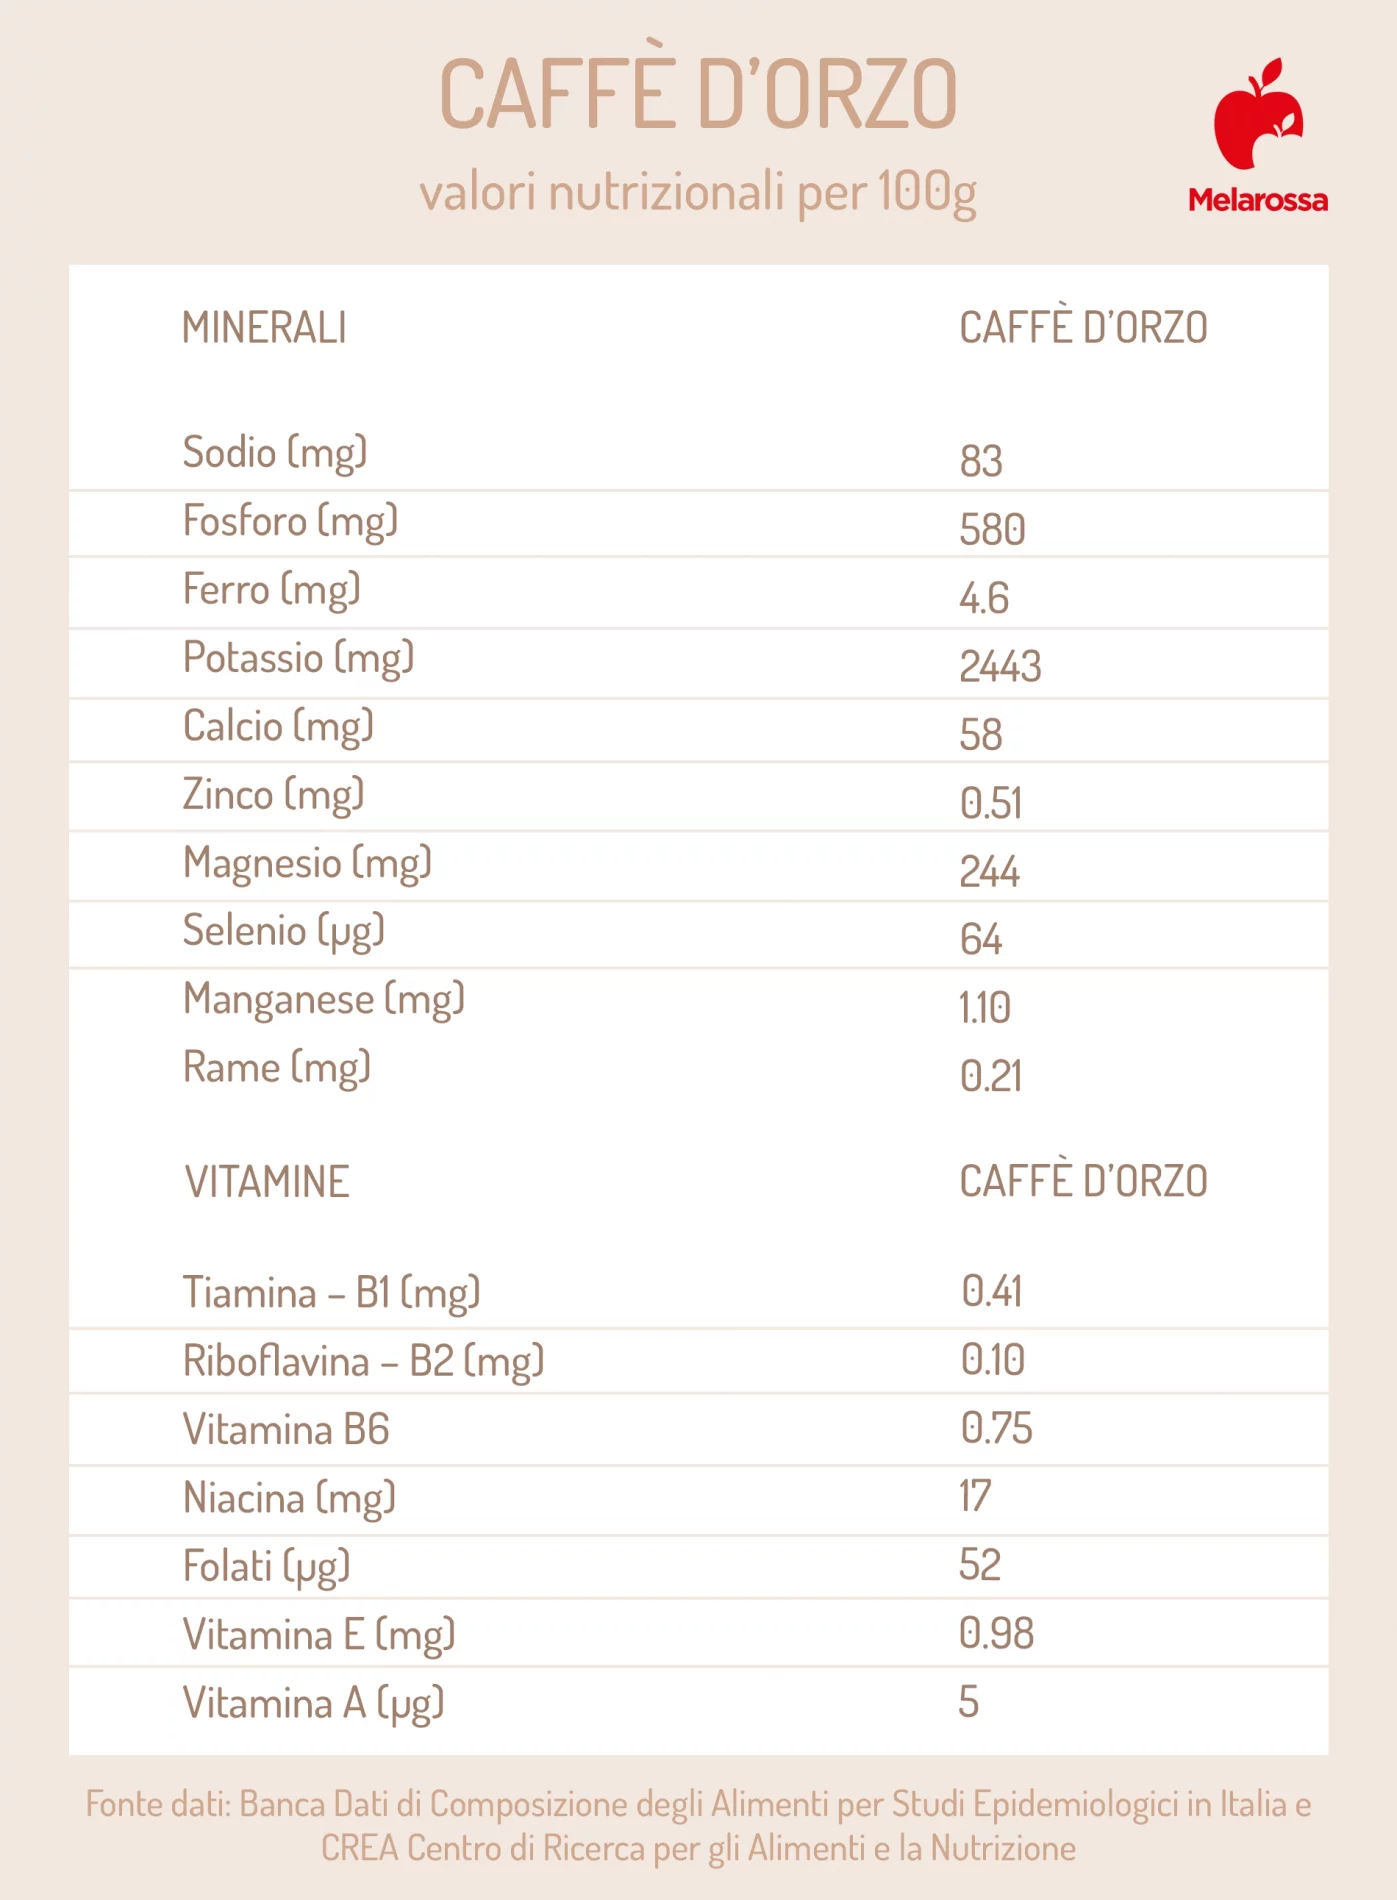 caffè d'orzo: valori nutrizionali